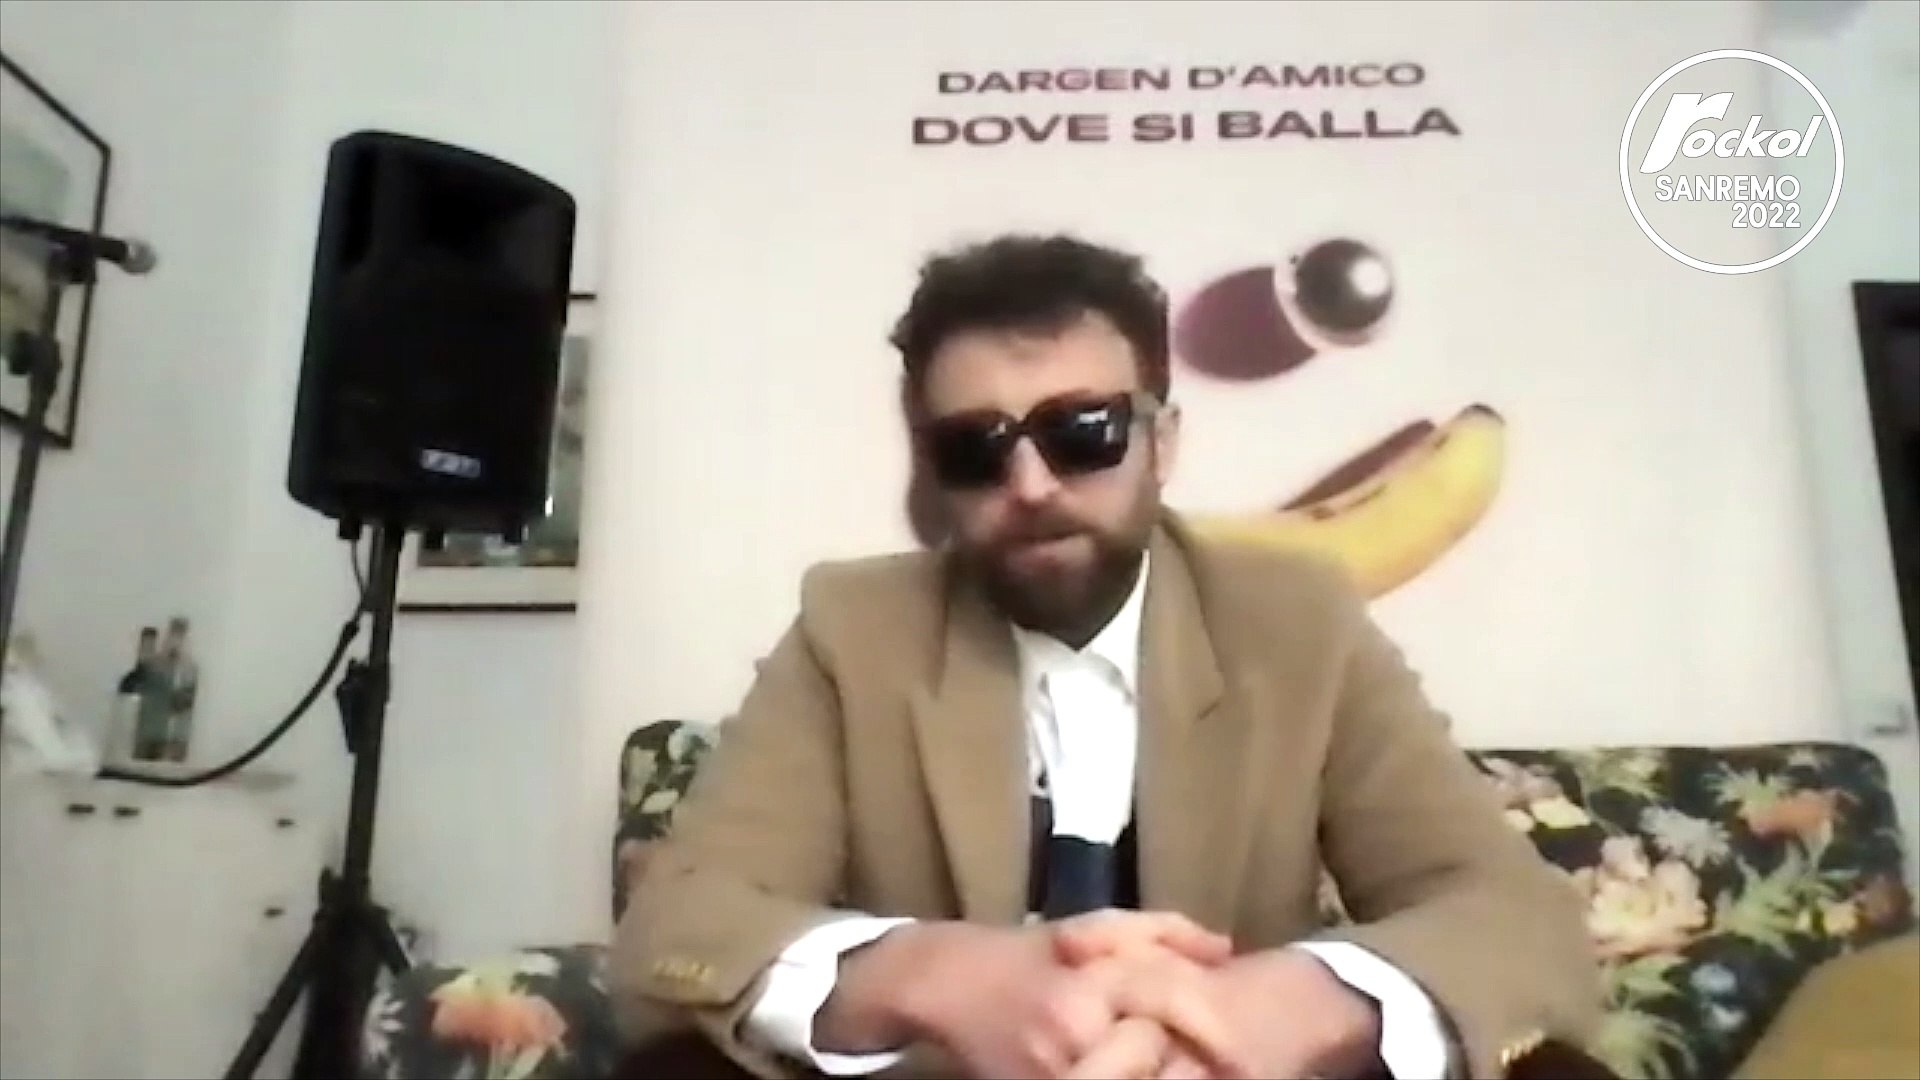 Sanremo 2022, Dargen D'Amico racconta "Dove si balla" - Video Dailymotion